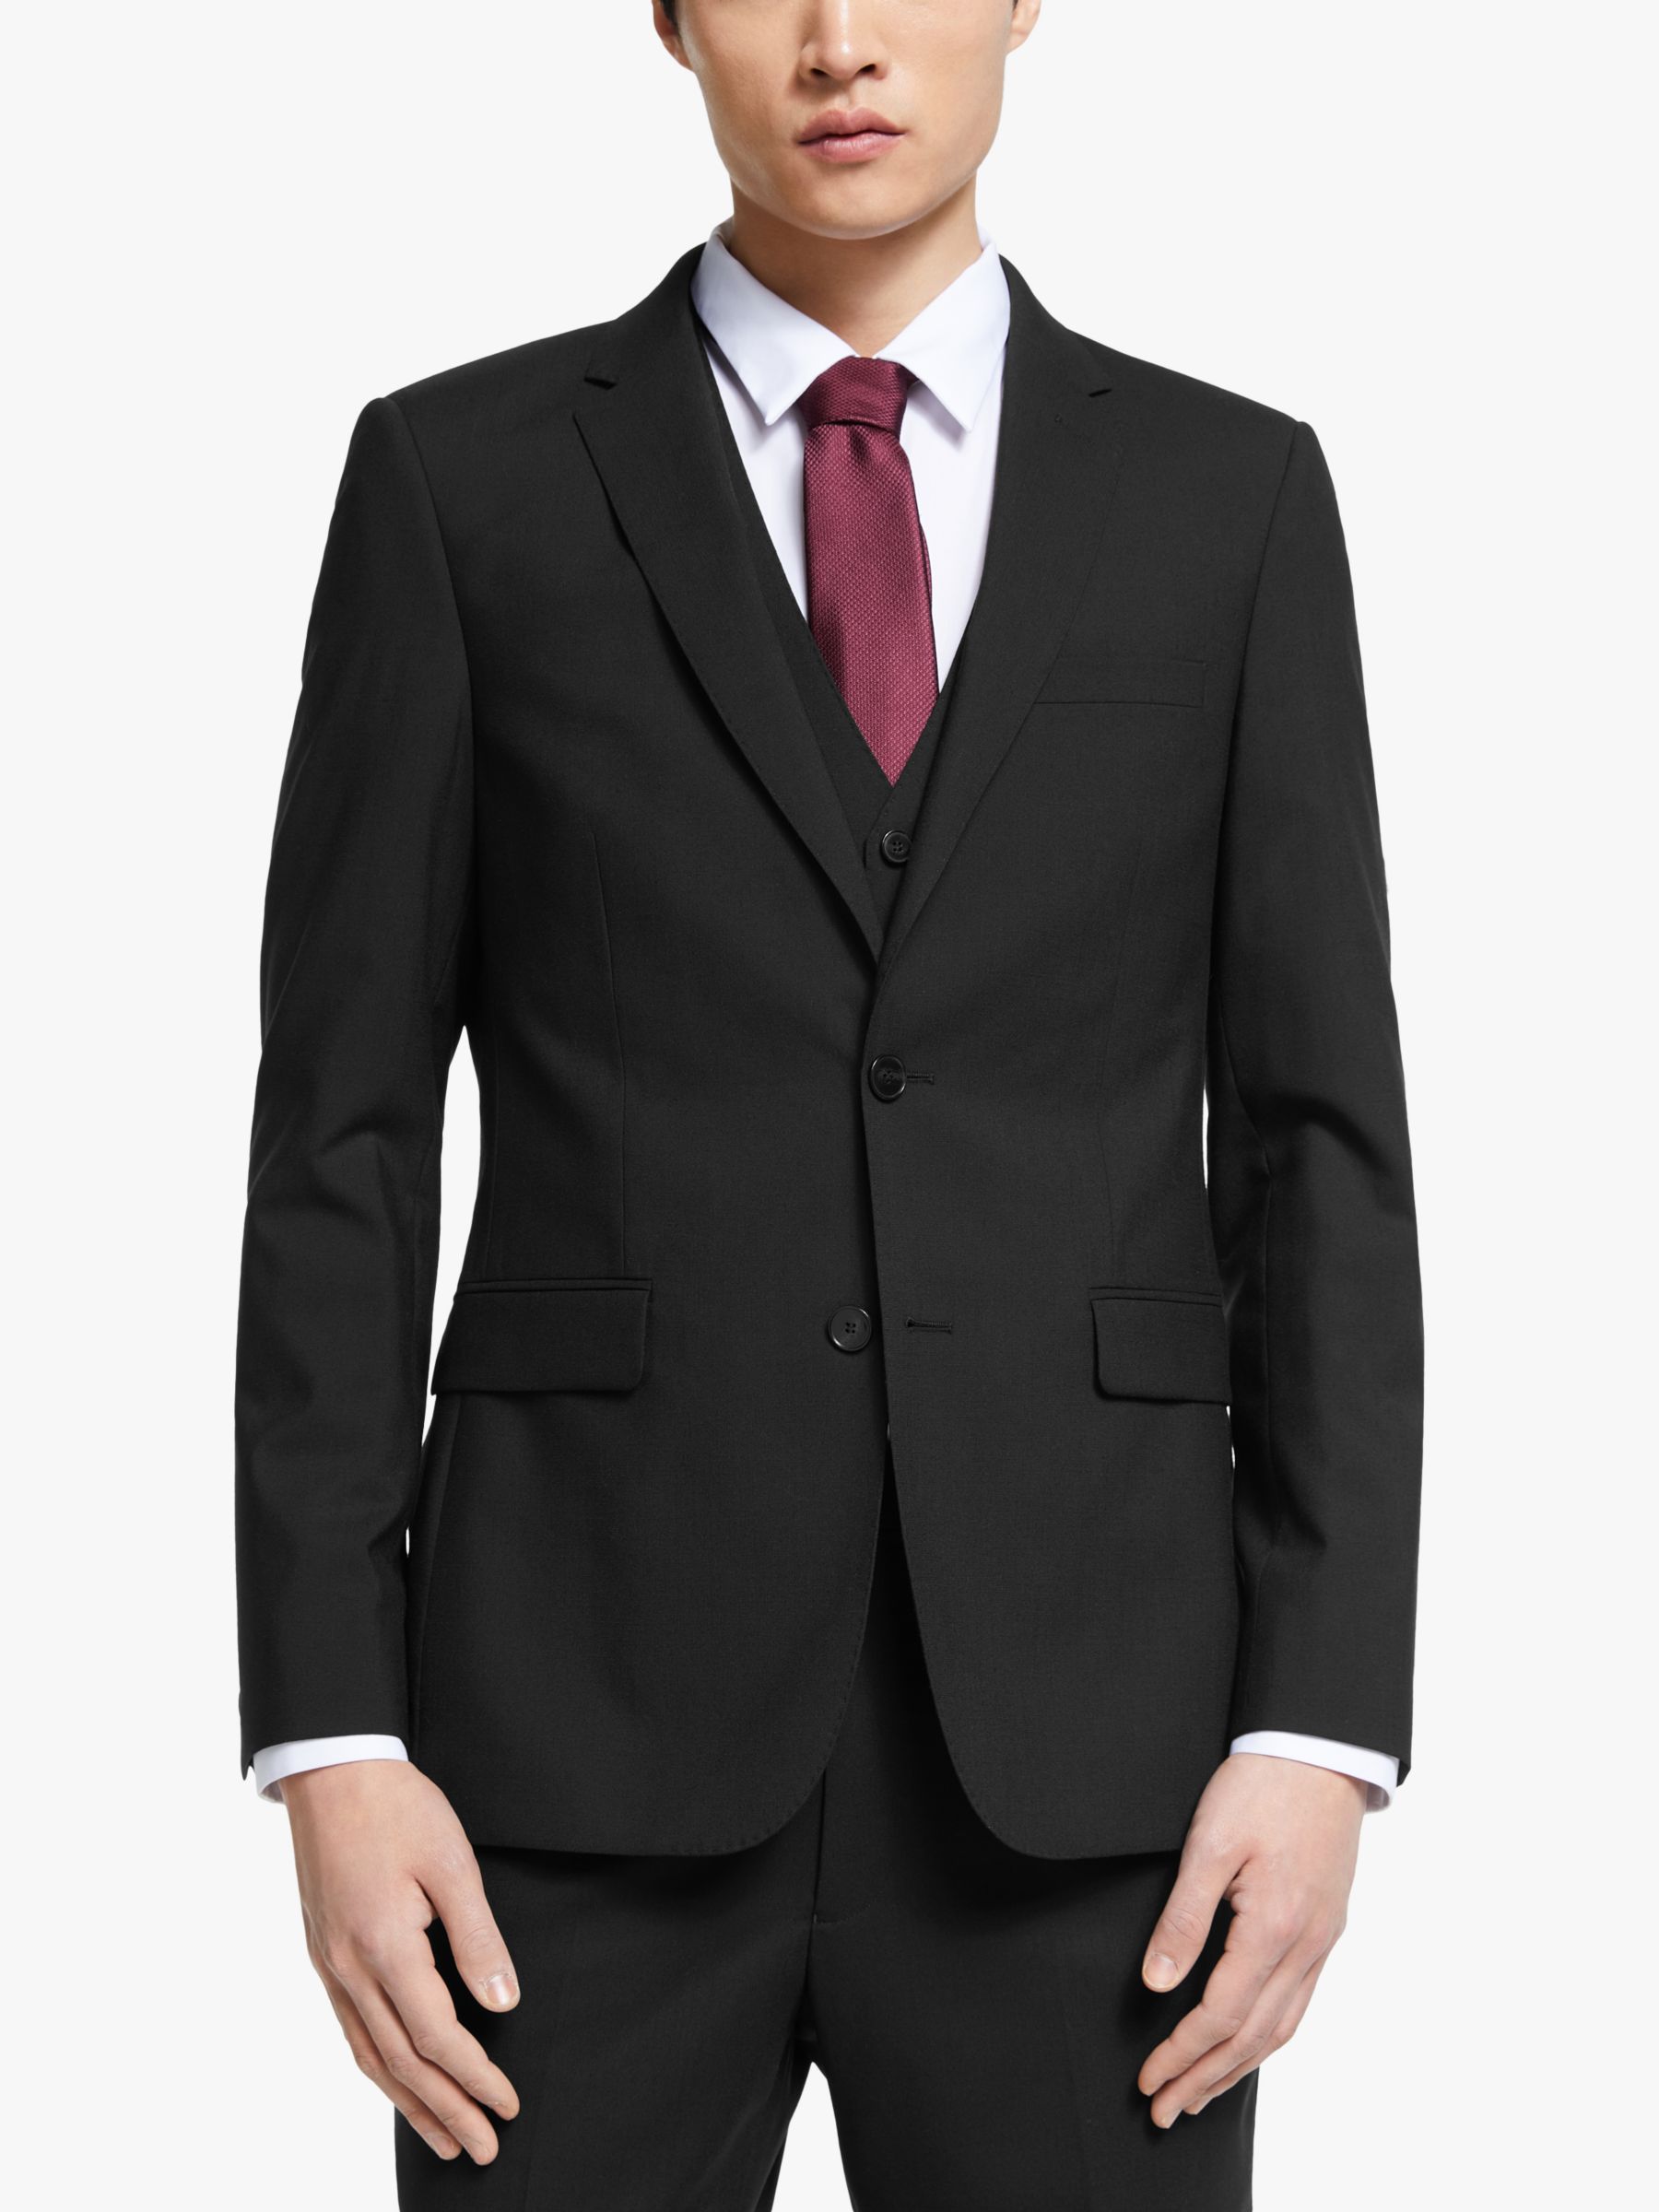 Kin Bengaline Wool Slim Fit Suit Jacket, Black at John Lewis & Partners